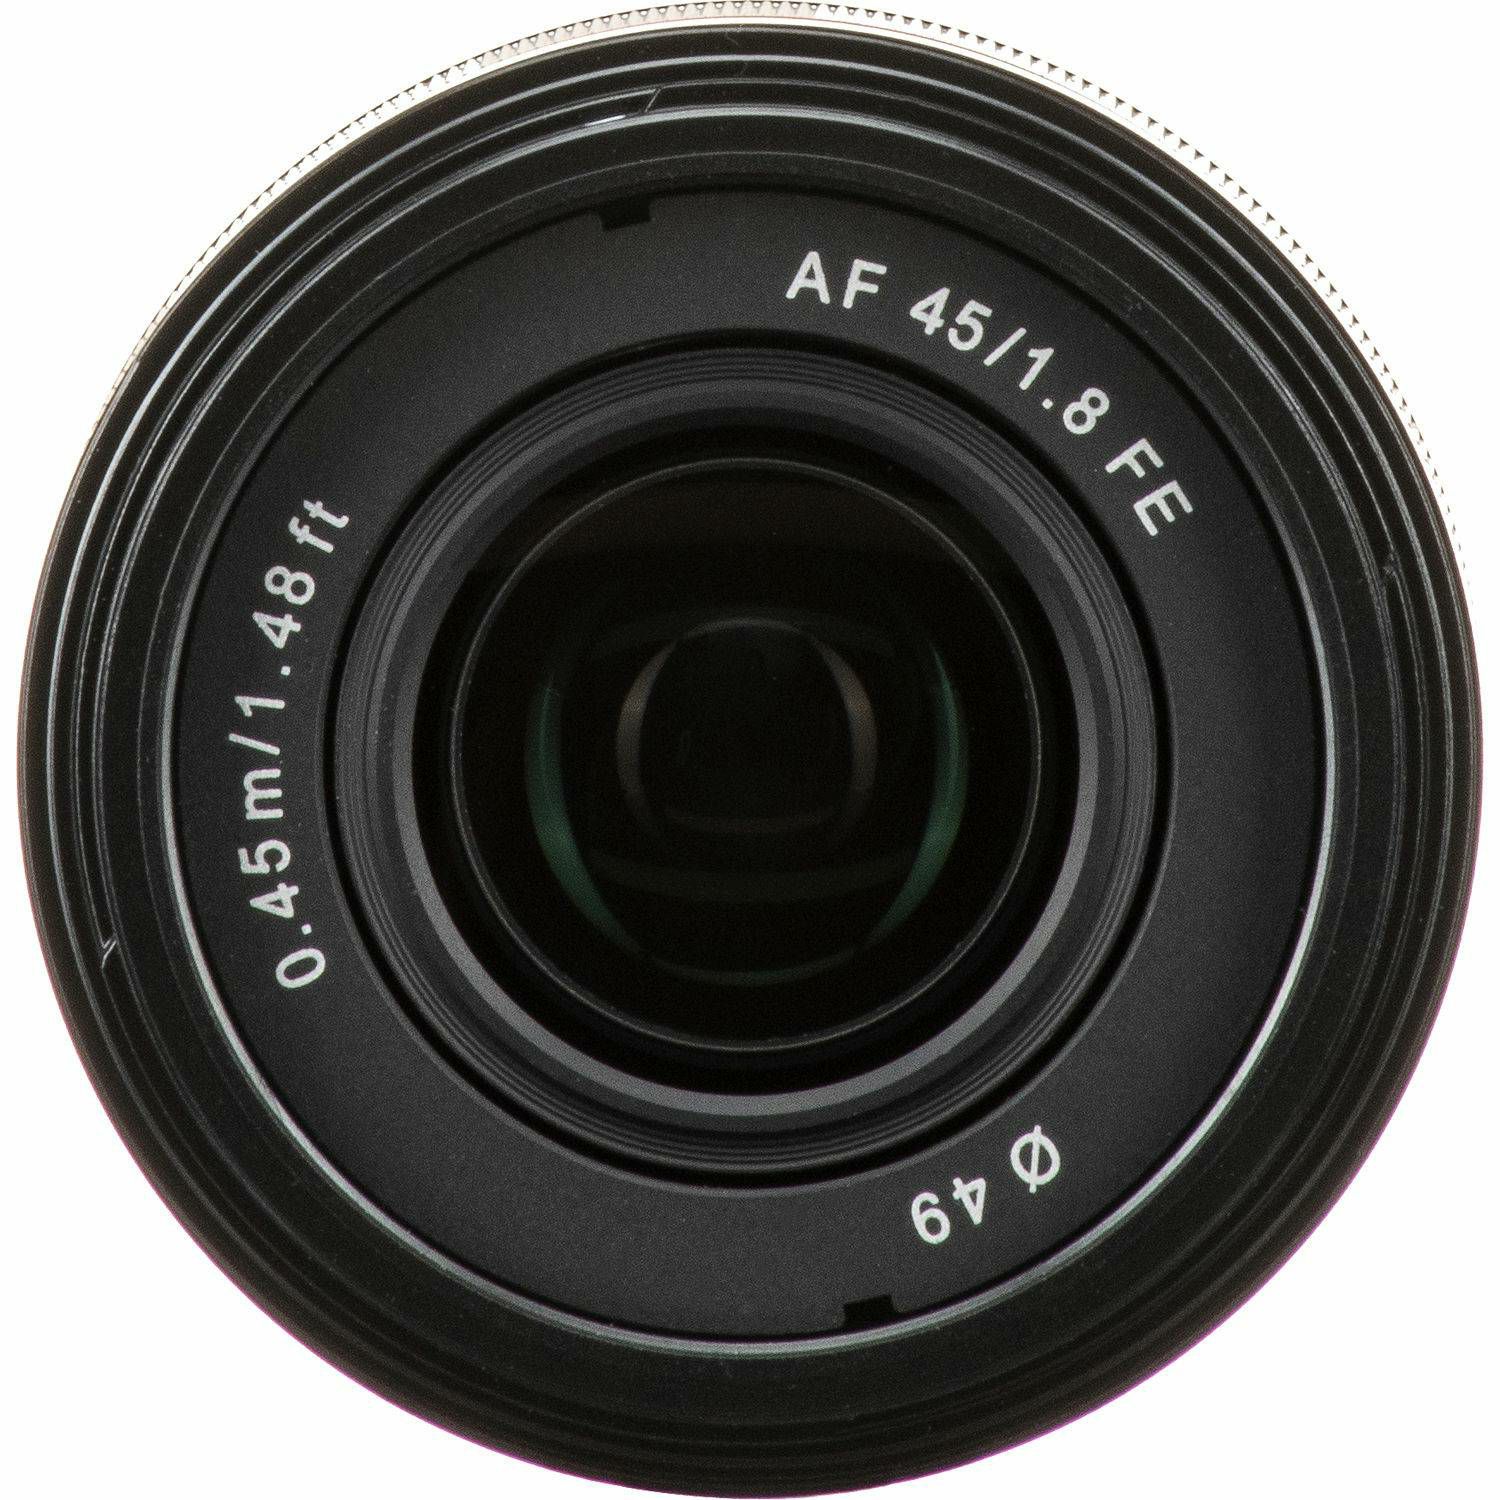 Samyang AF 45mm f/1.8 FE objektiv za Sony E-mount